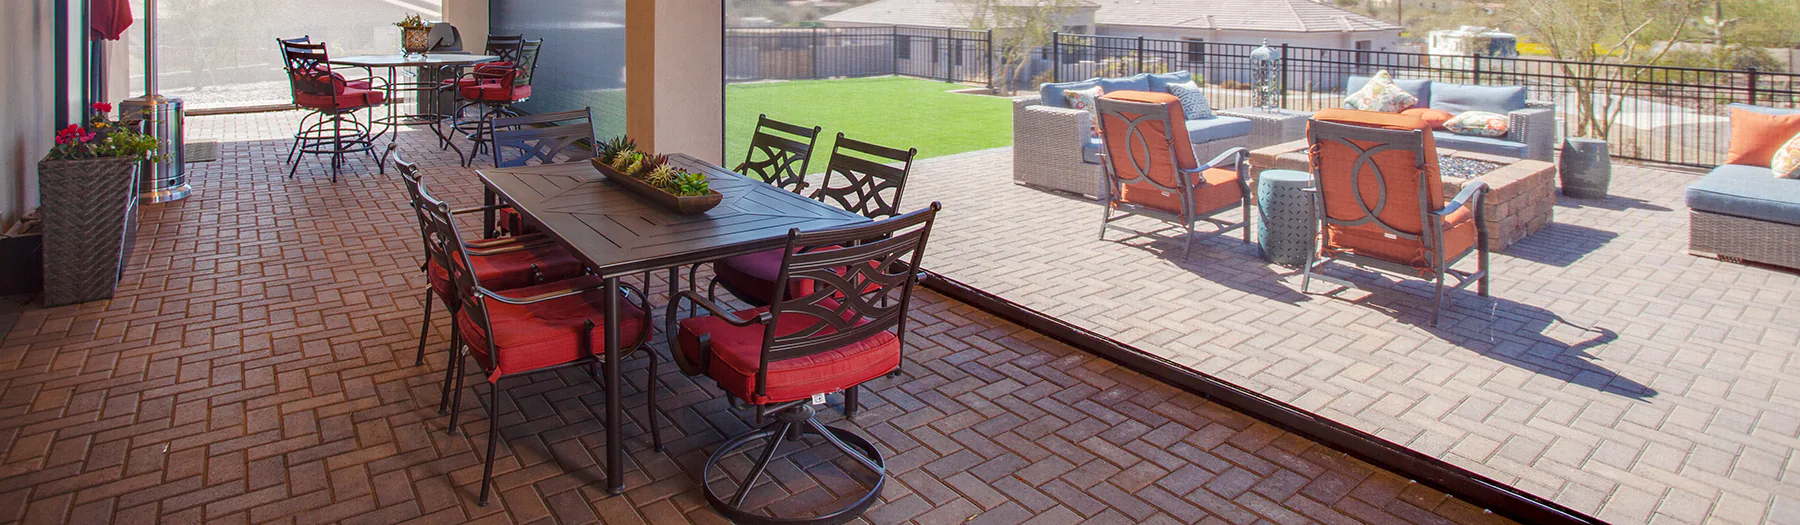 FlexShade ZIP XL outdoor shades installed at a Phoenix, AZ residence.